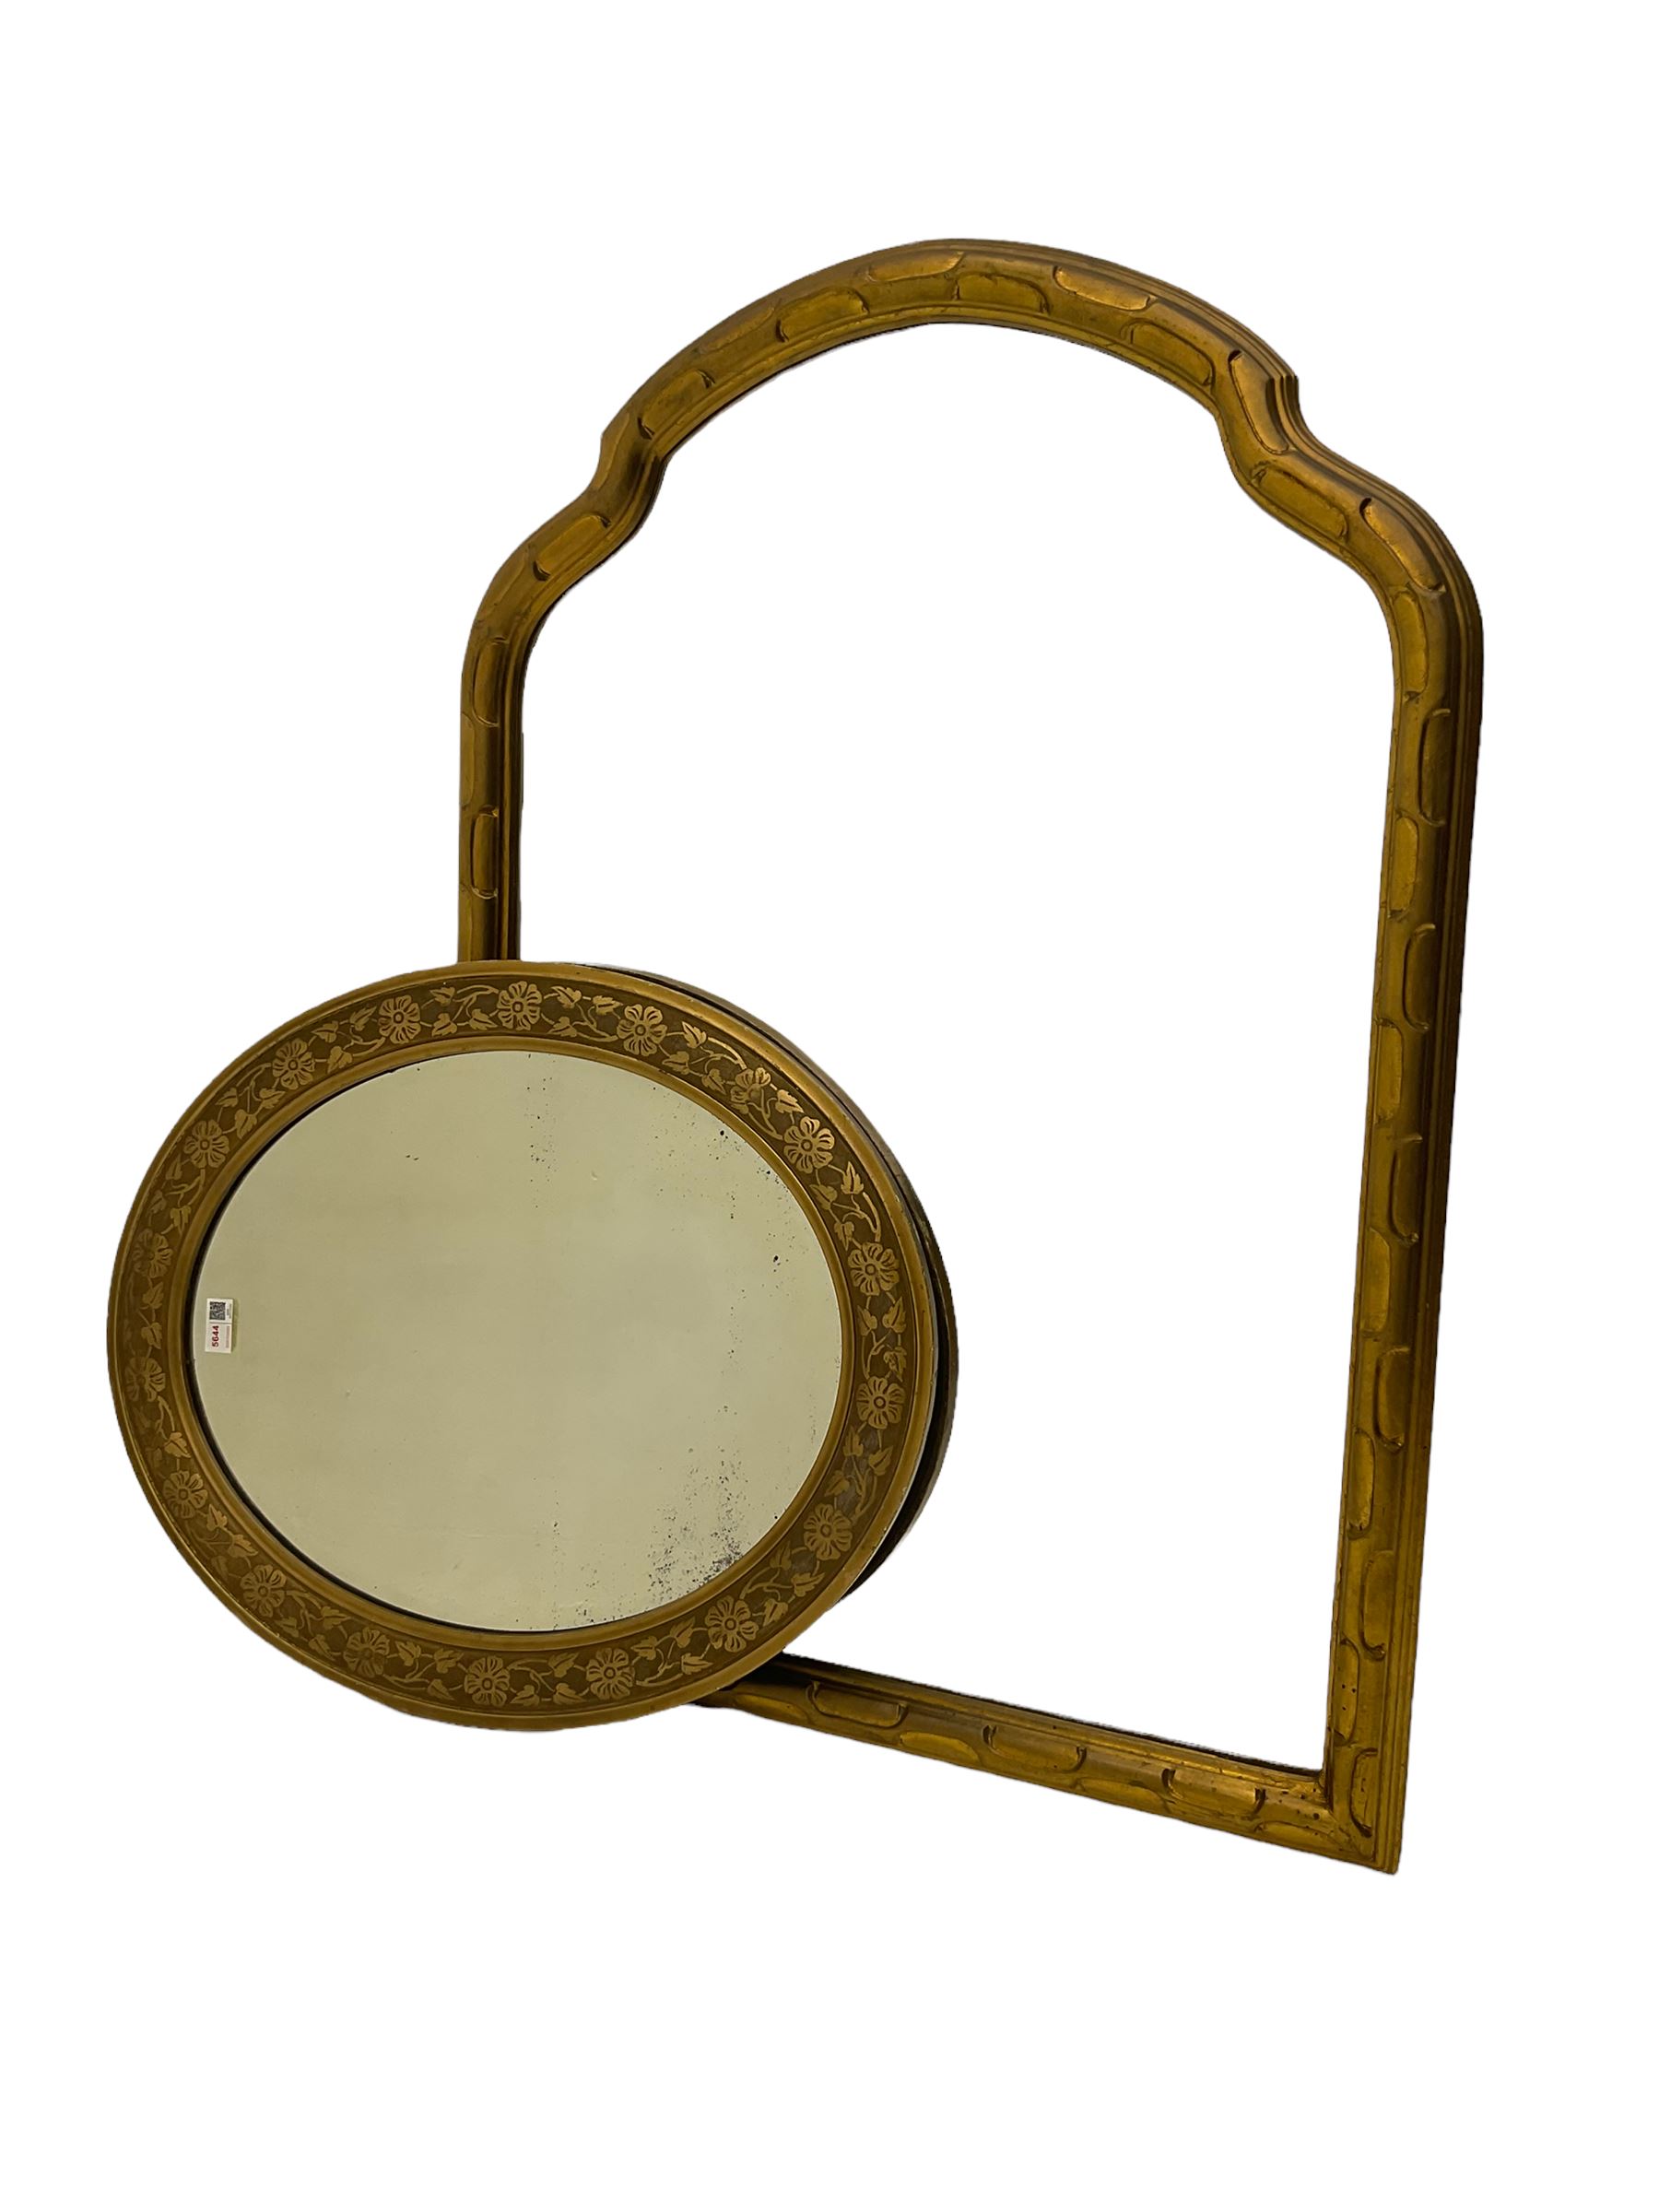 Shaped arch top wall mirror in gilt frame (68cm x 97cm)